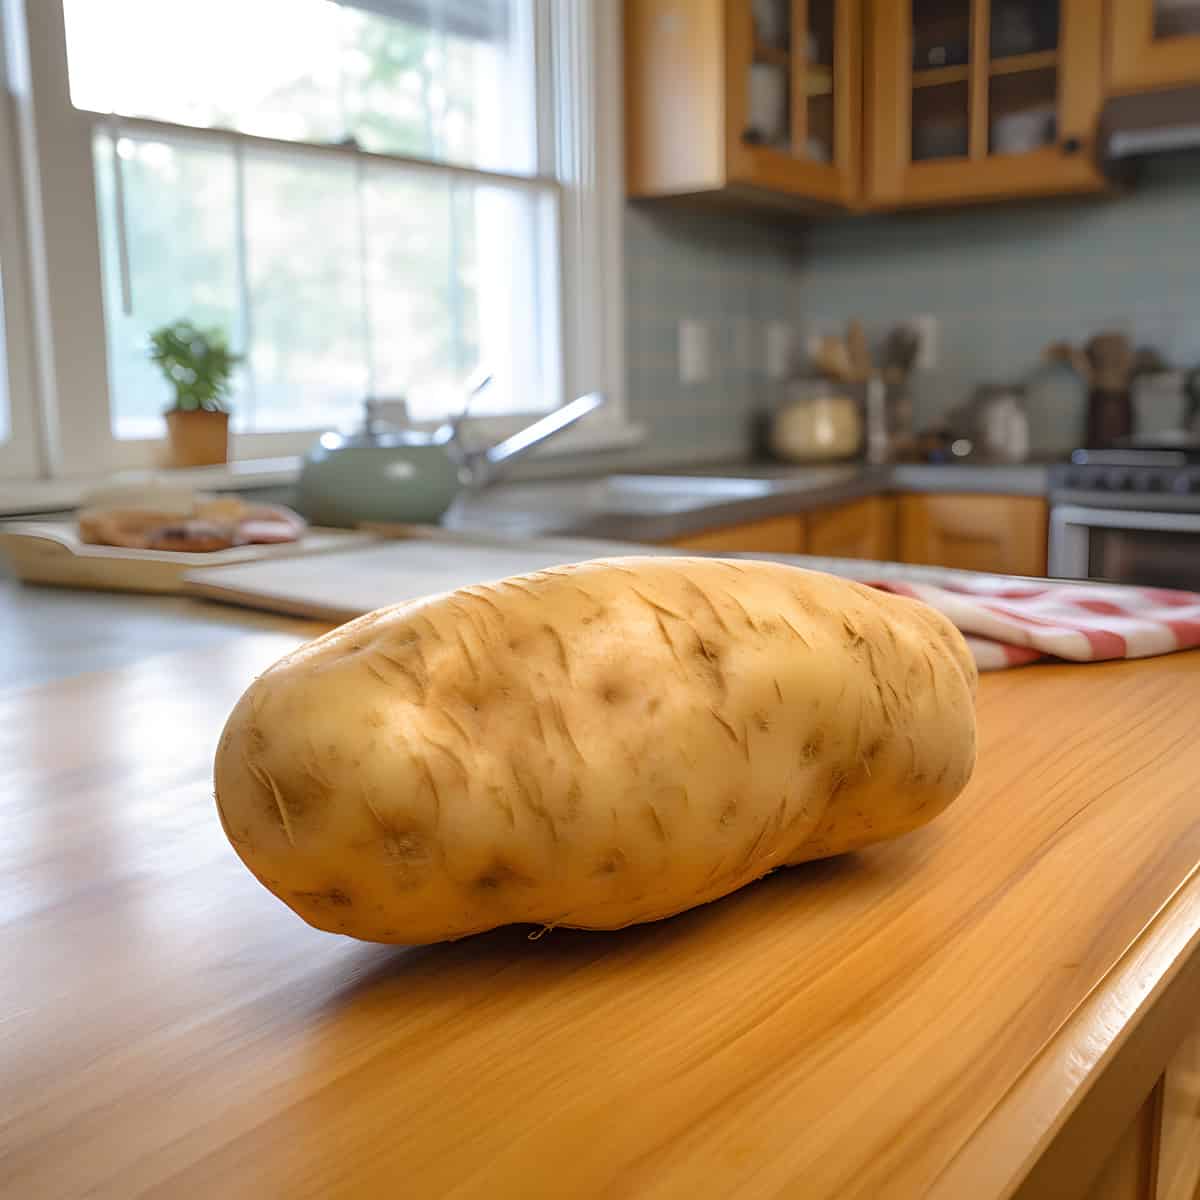 Bannock Russet Potatoes on a kitchen counter